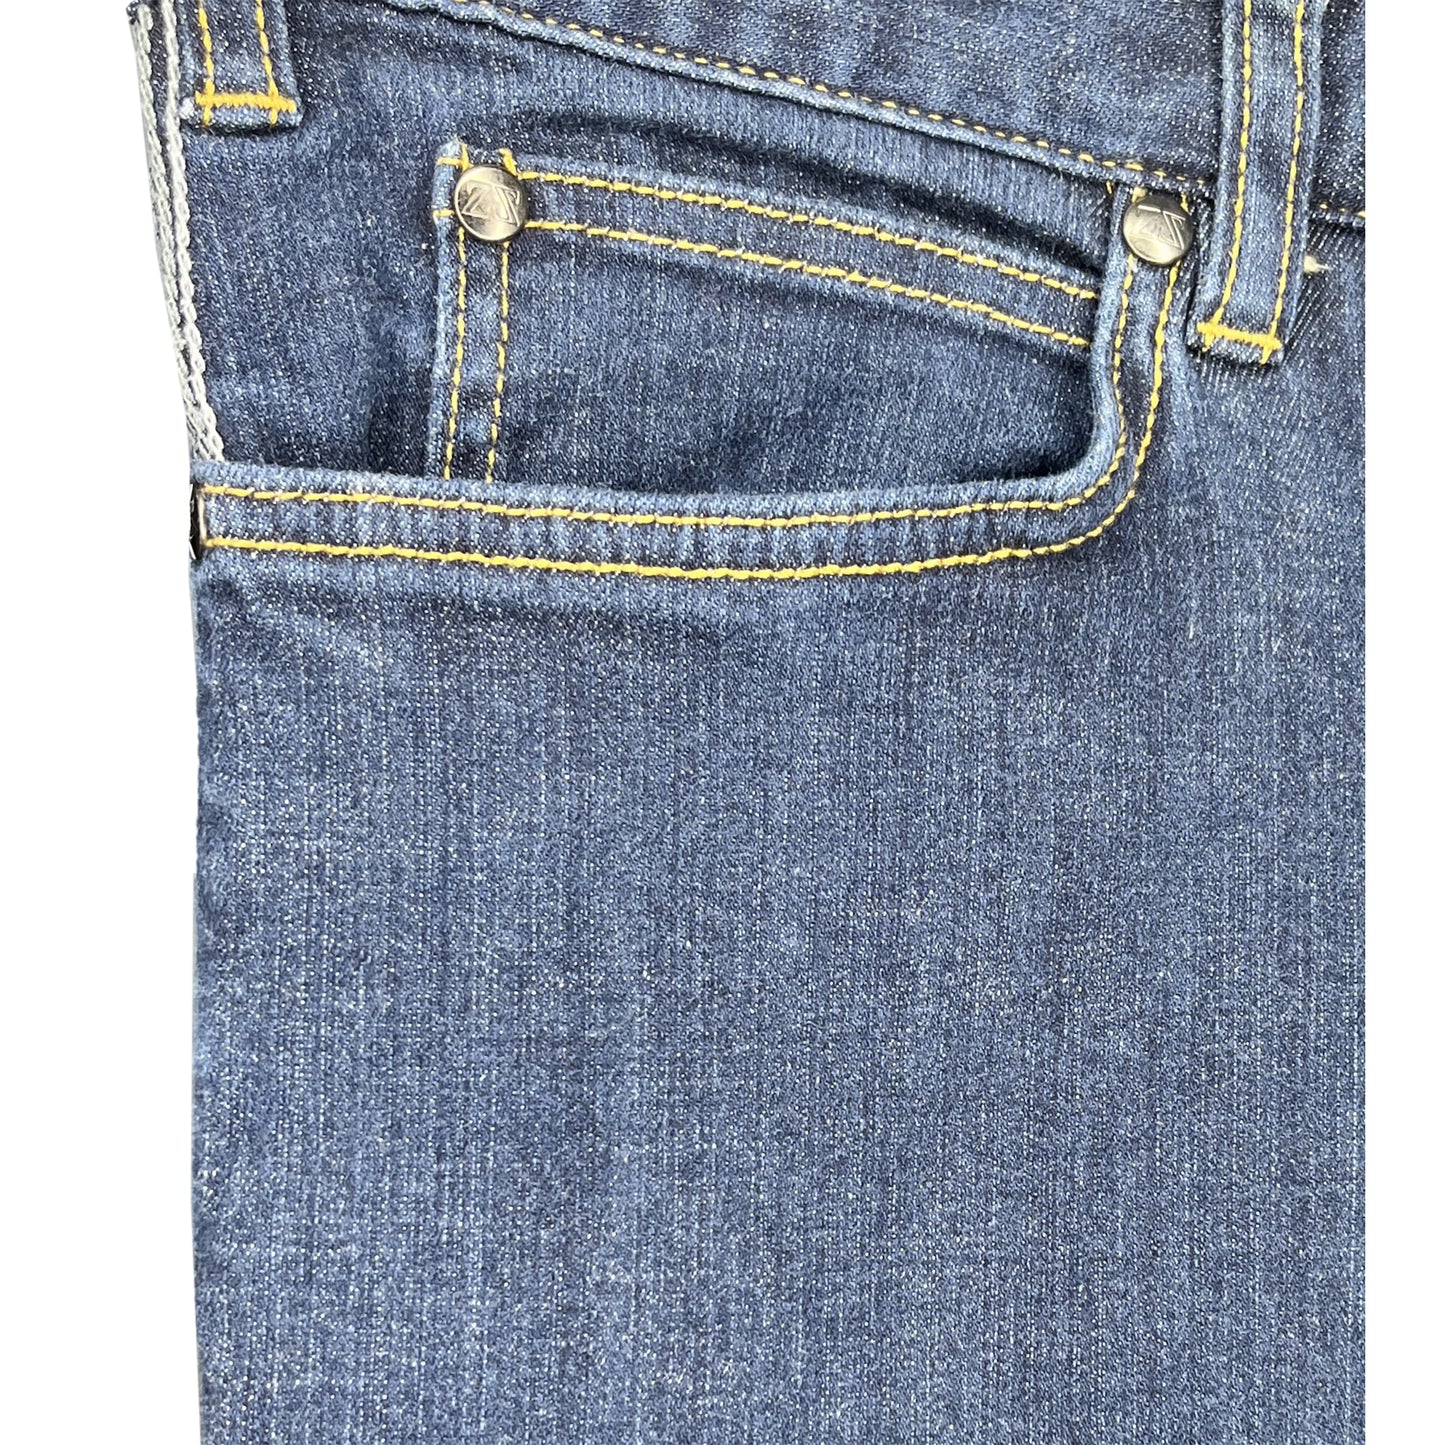 Zegna Sport Denim Jeans Dark Blue Size 34 SKU 000423-3